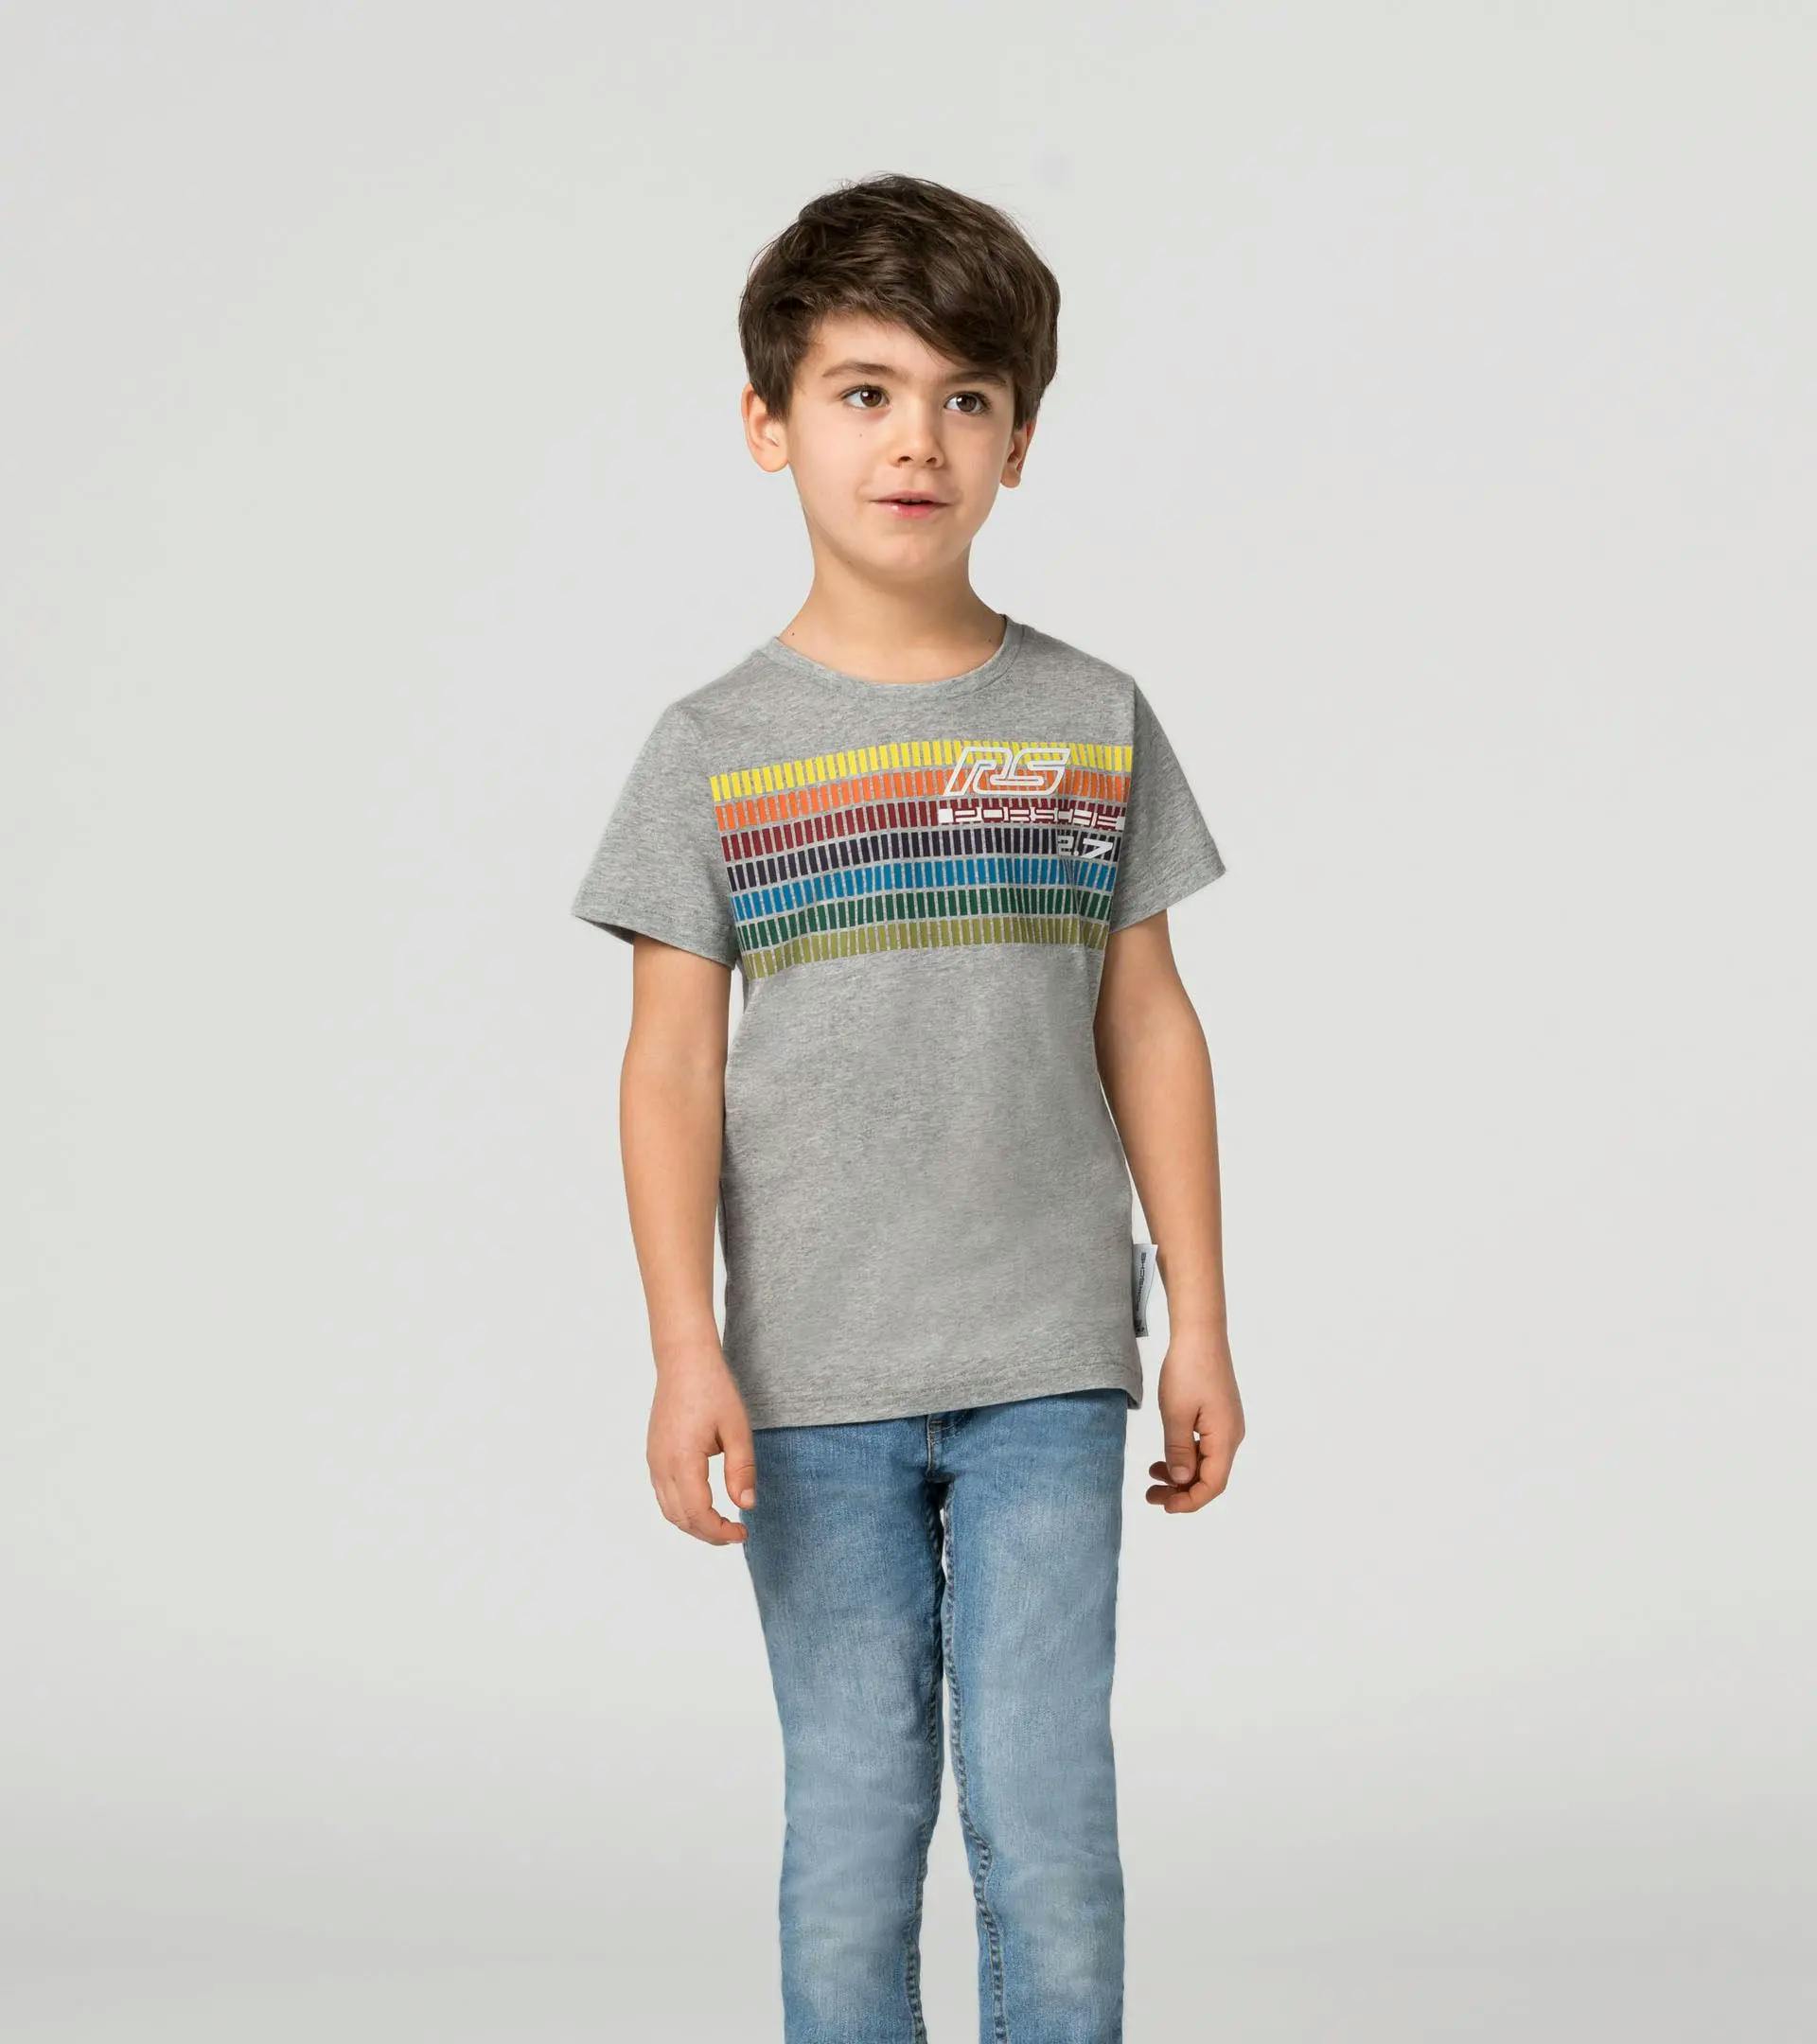 Kids T-Shirt – RS 2.7 5